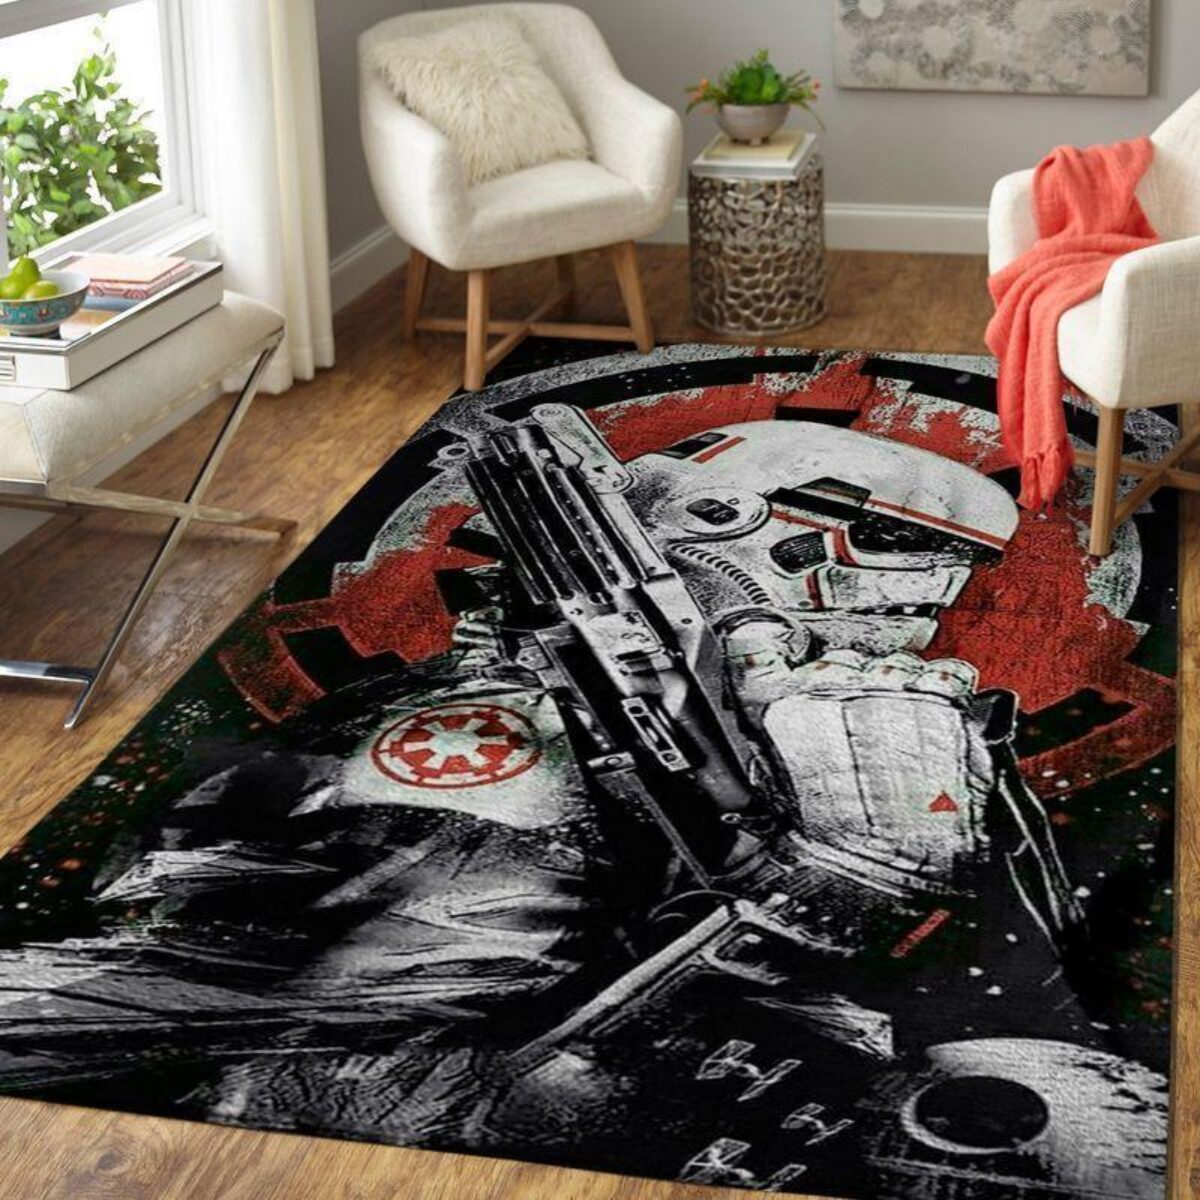 Storm Trooper Star Wars Rug - Custom Size And Printing